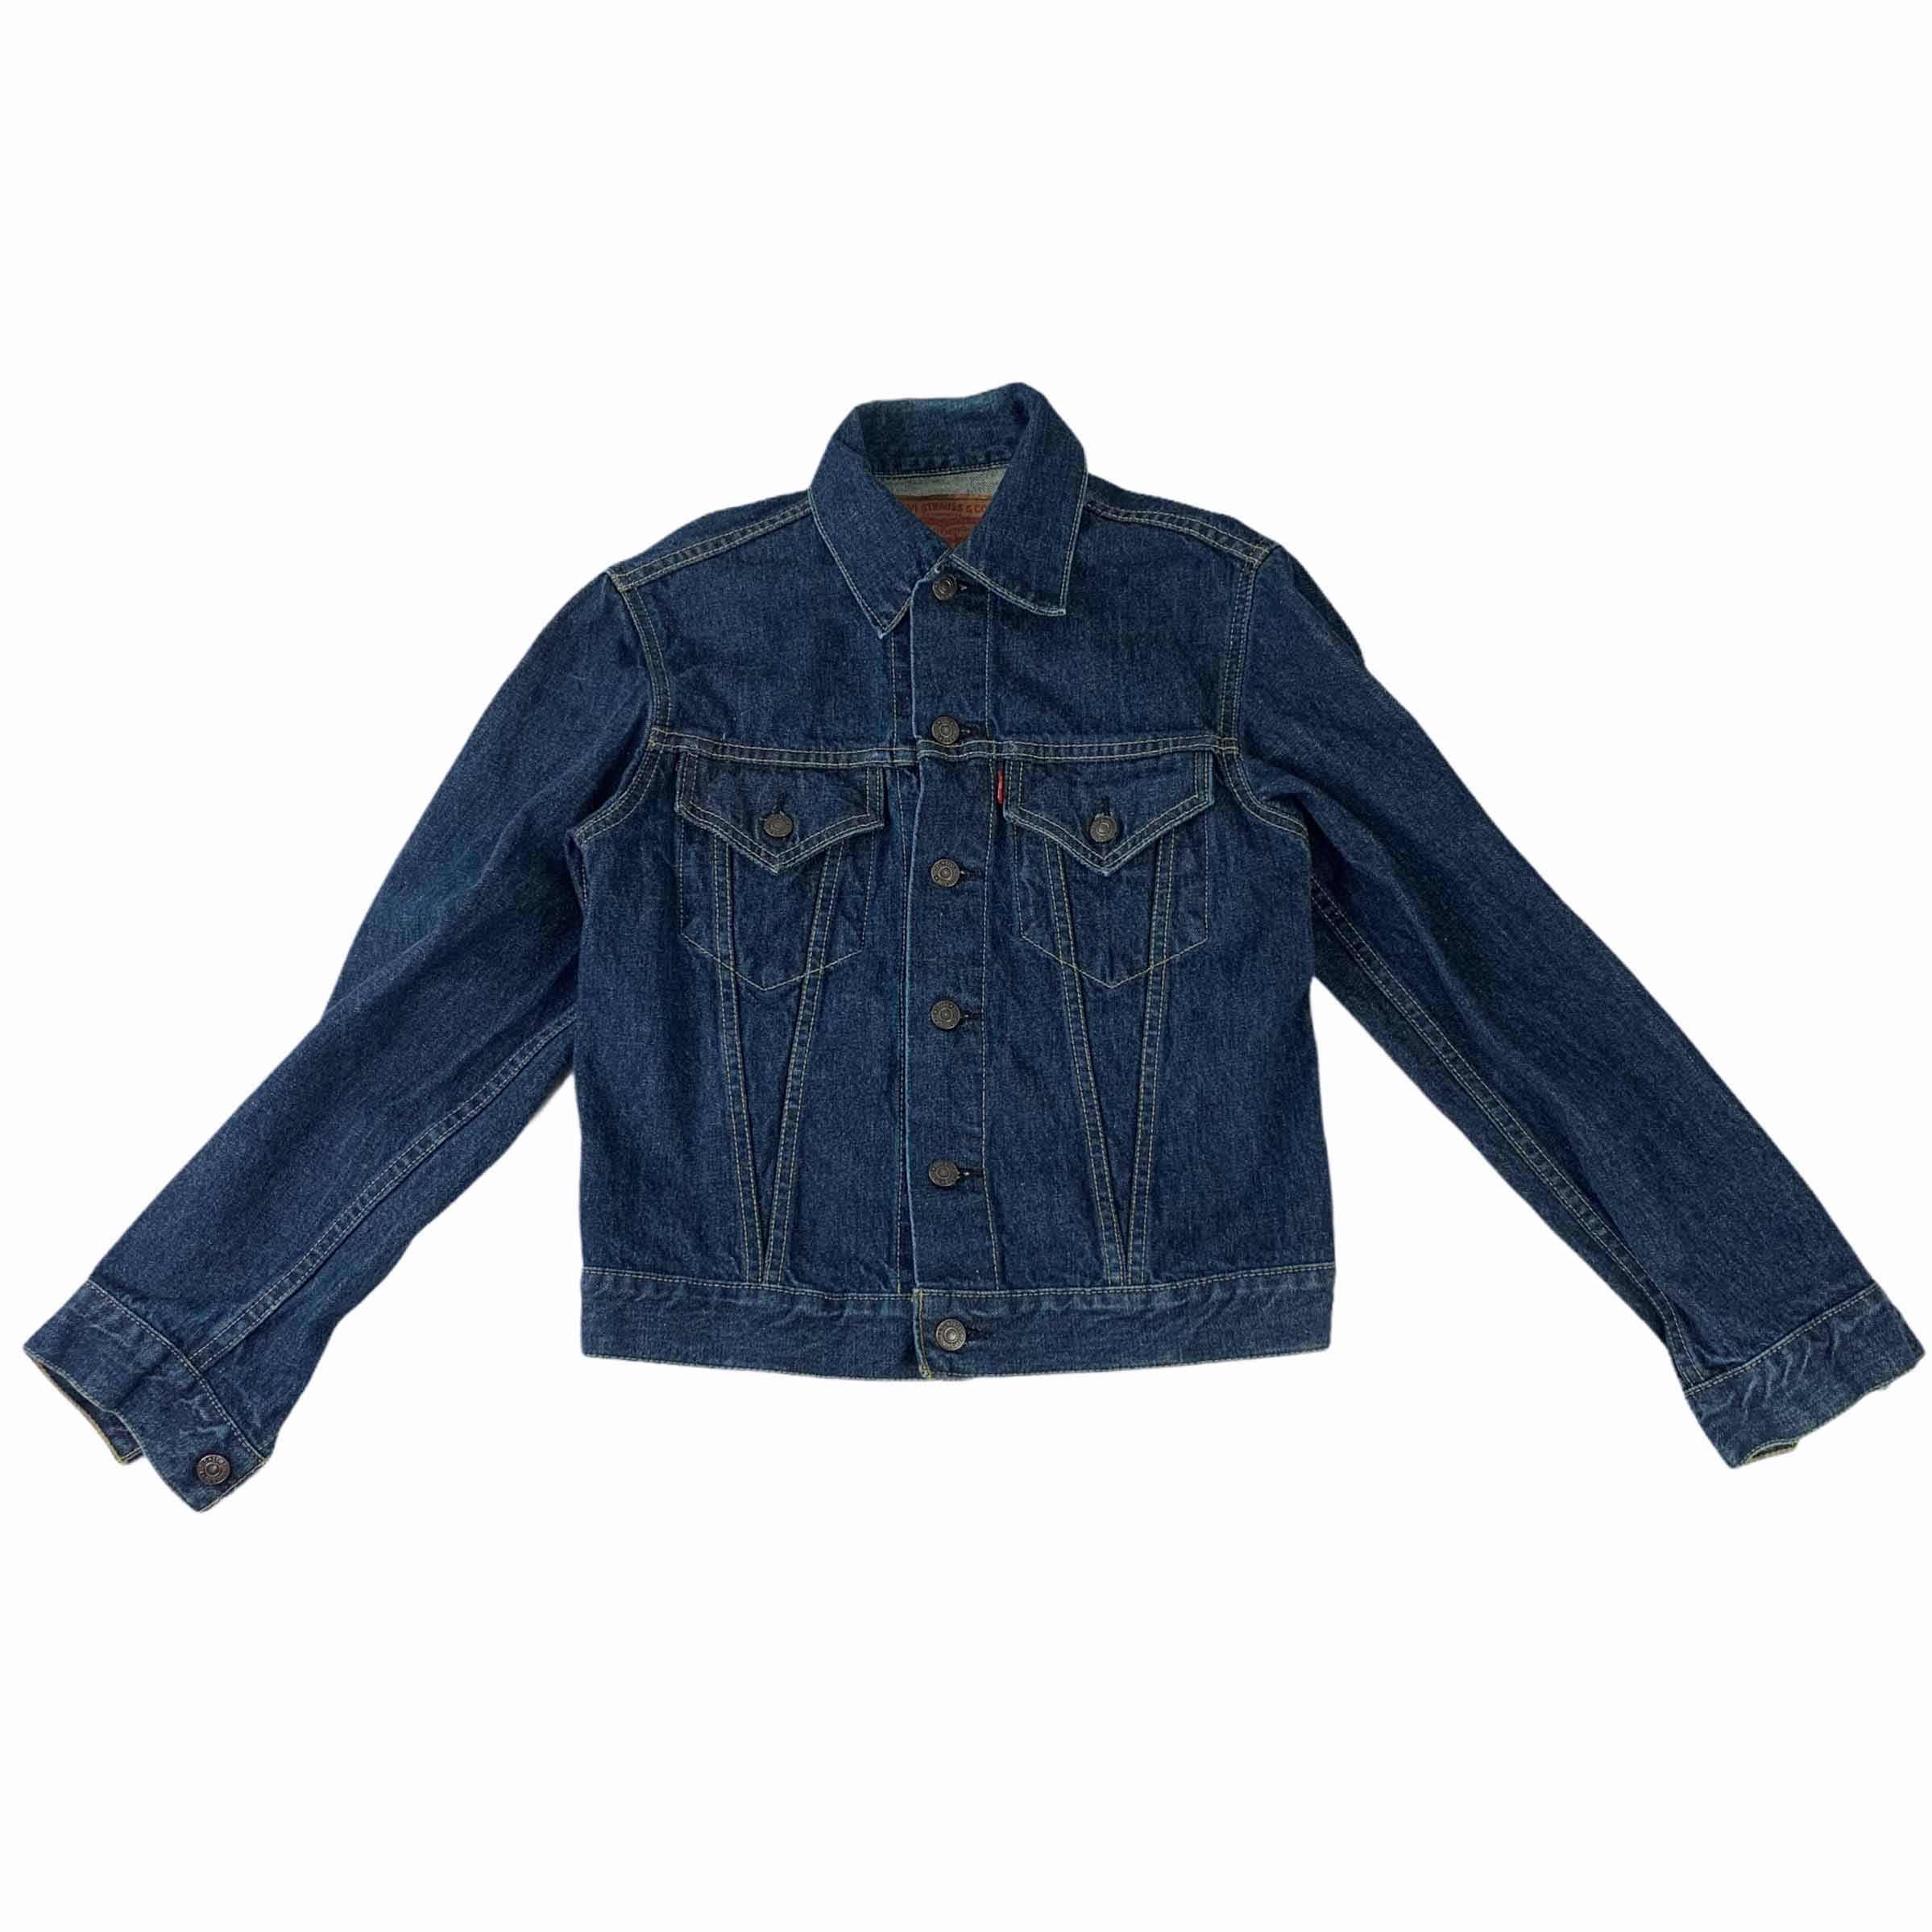 [Levis] Vintage Indigo Denim Jacket - Size 36